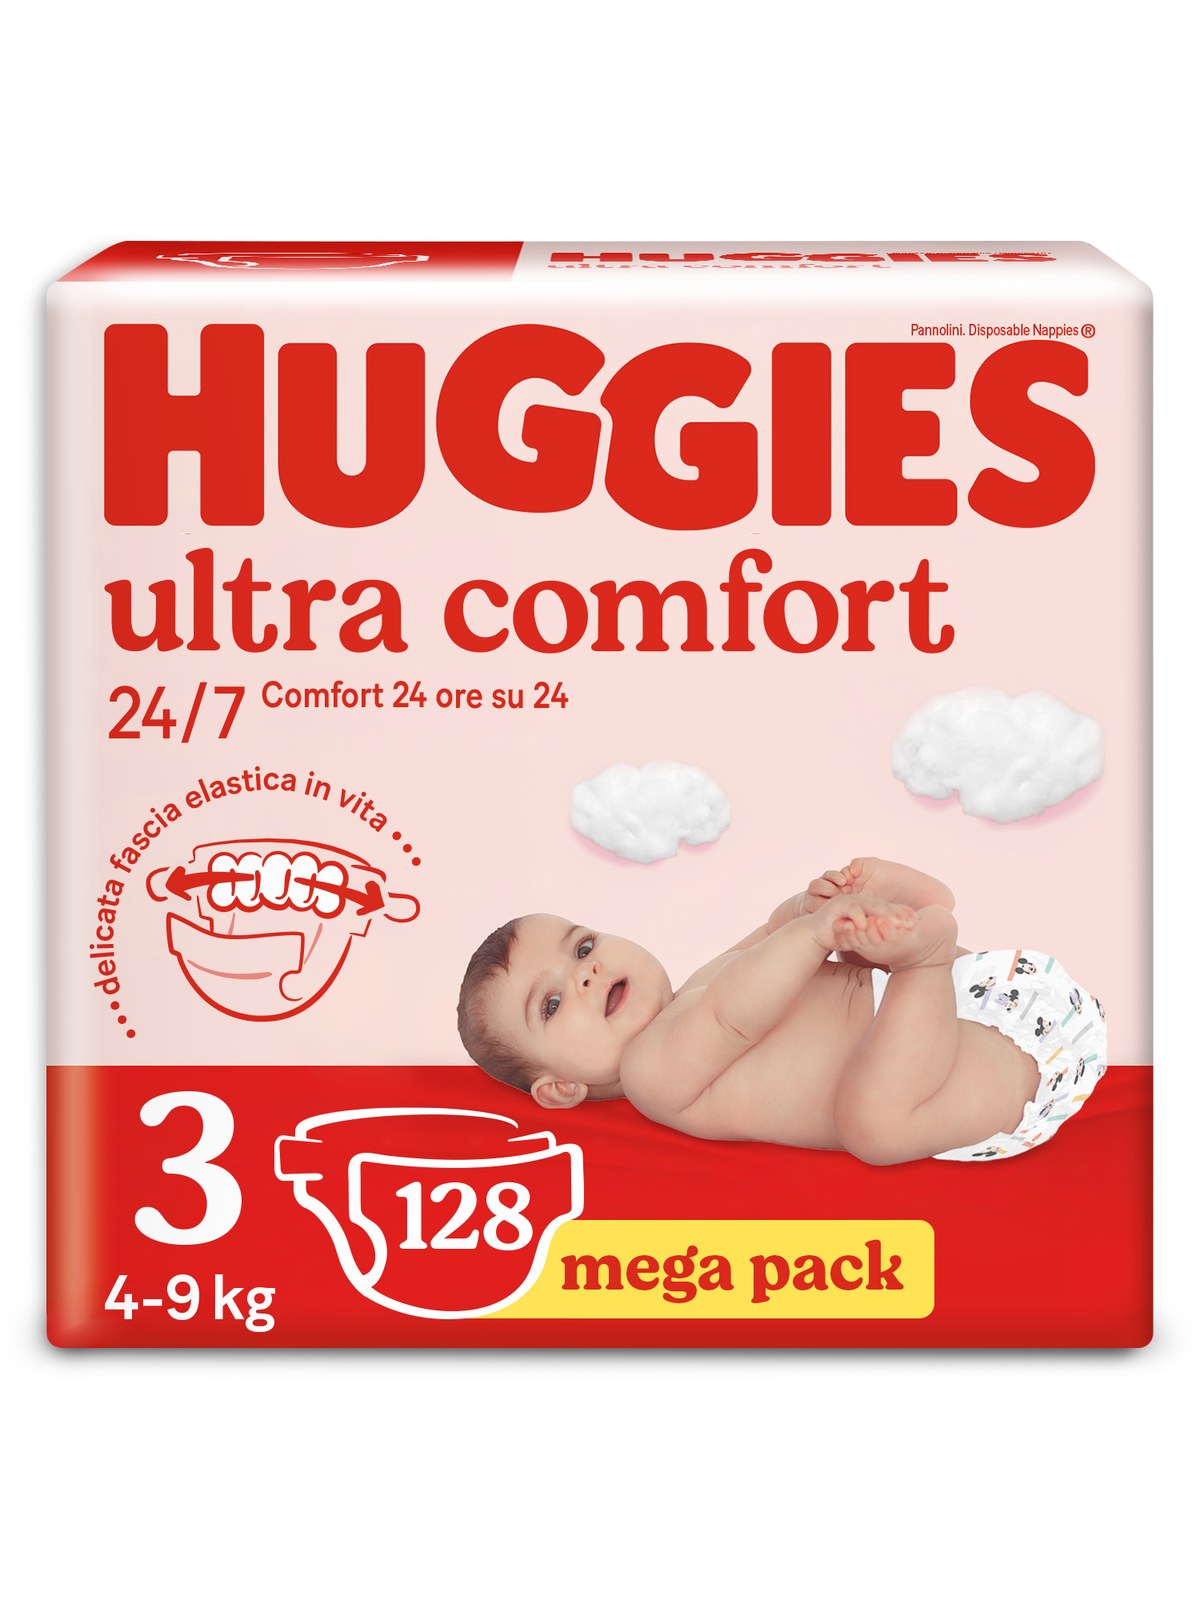 Huggies pannolini ultra comfort megapack tg.3 (4-9 kg), 128 pannolini - Huggies